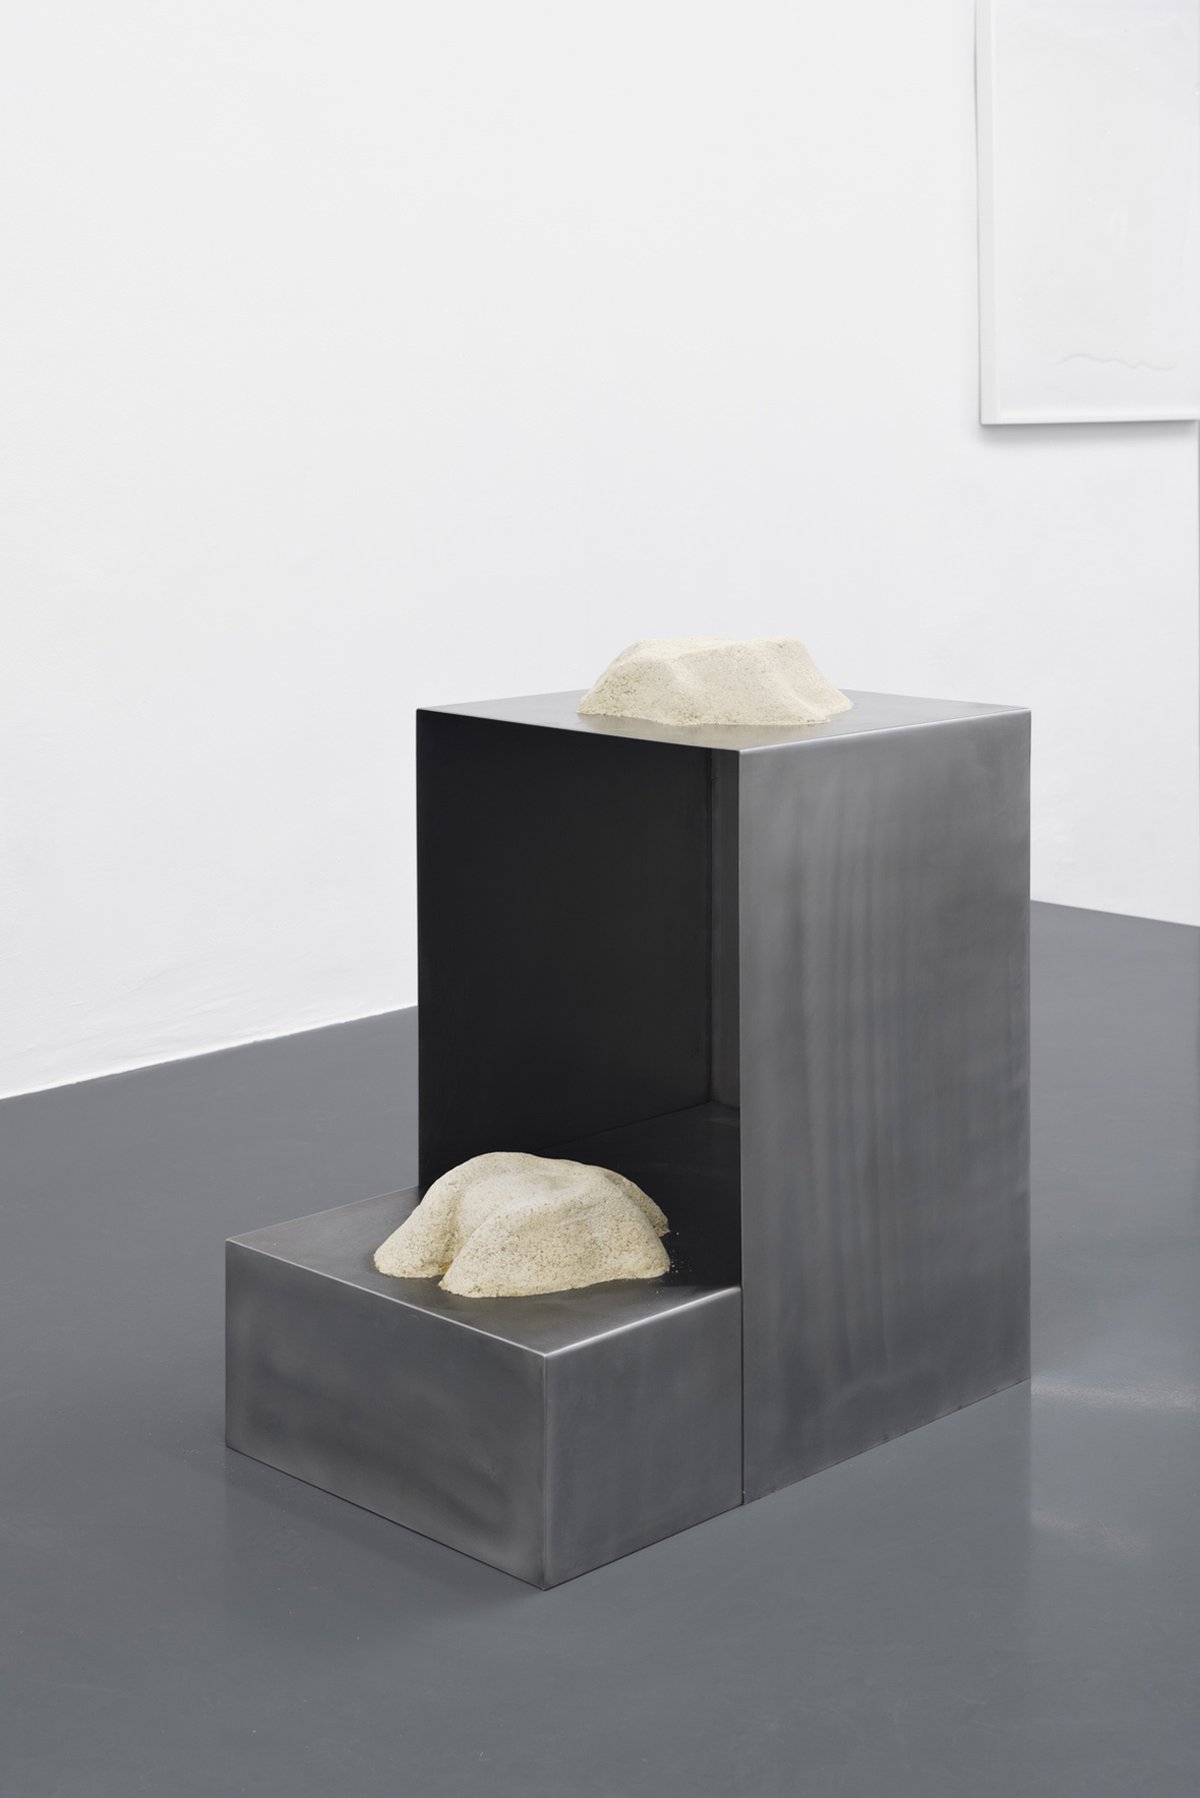 Lena HenkeEure Frankfurter Küche, 2016Metal, sand, silicone, fiberglass, epoxy resin, rubber70 x 70 x 45 cm